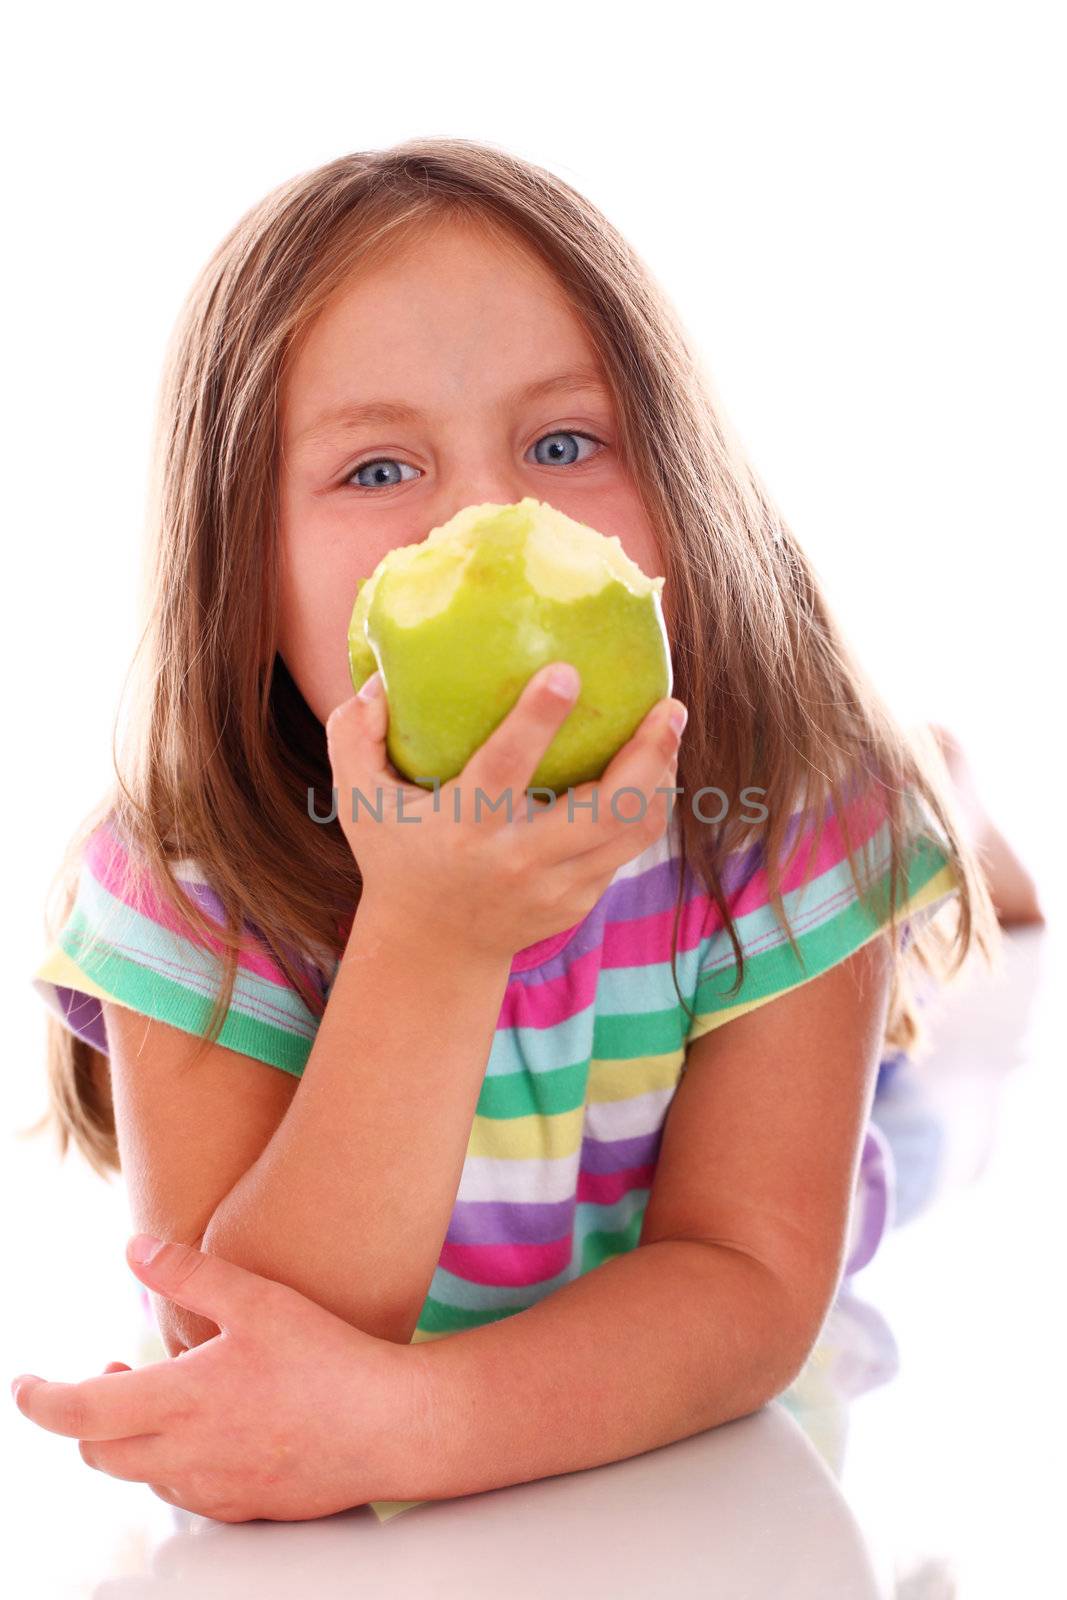 Little girl eating green apple by rufatjumali